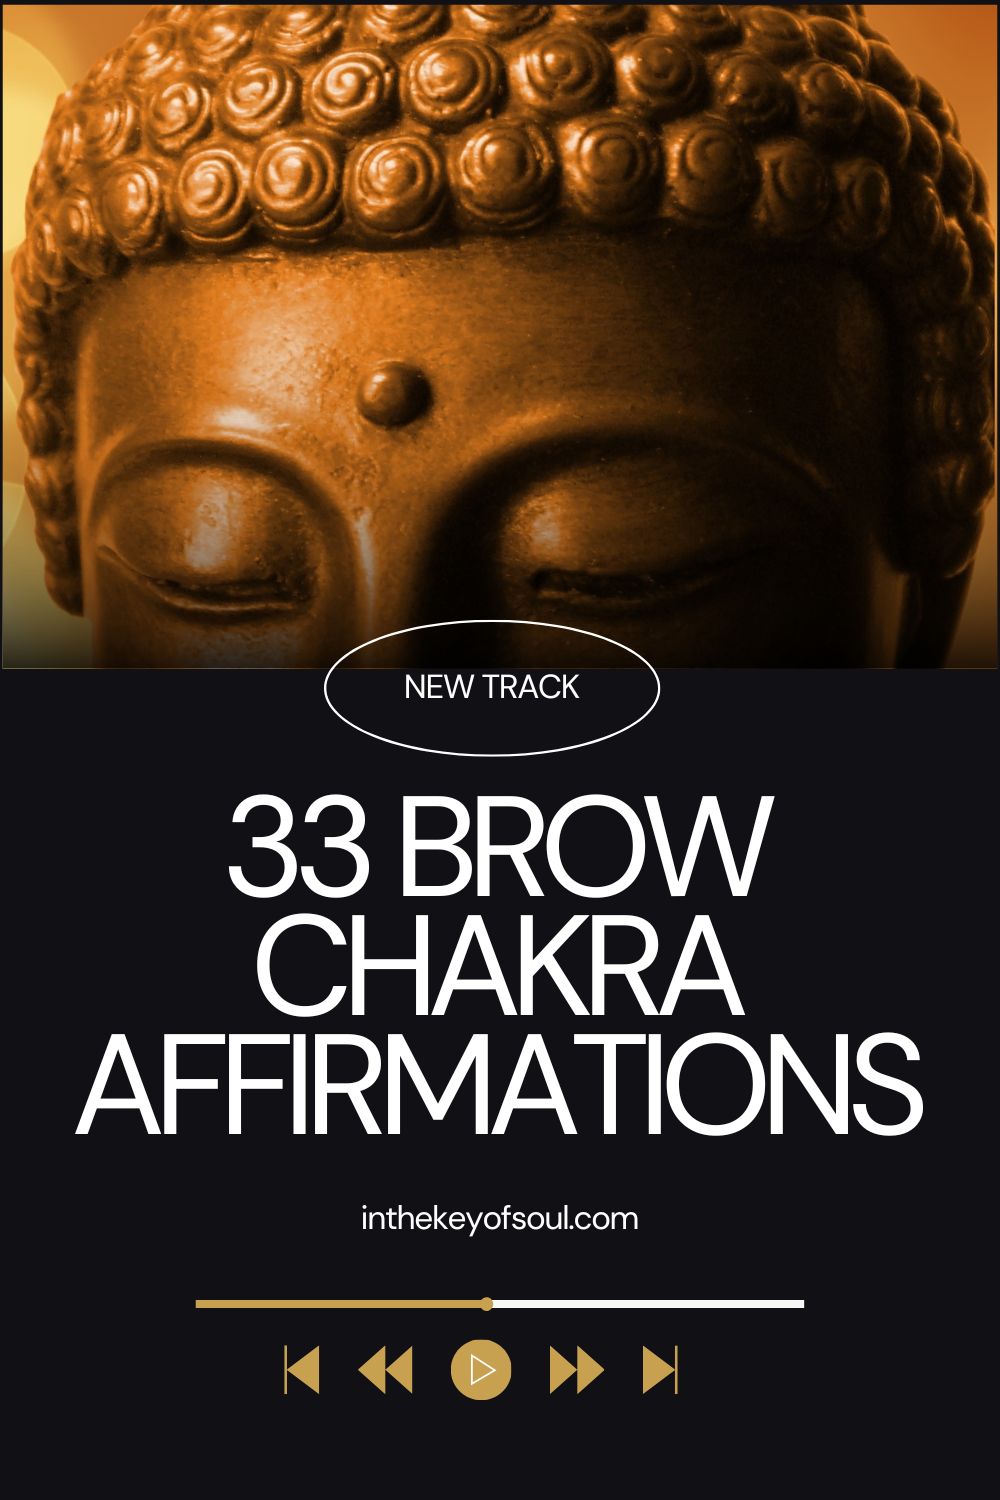 33 BROW CHAKRA AFFIRMATIONS